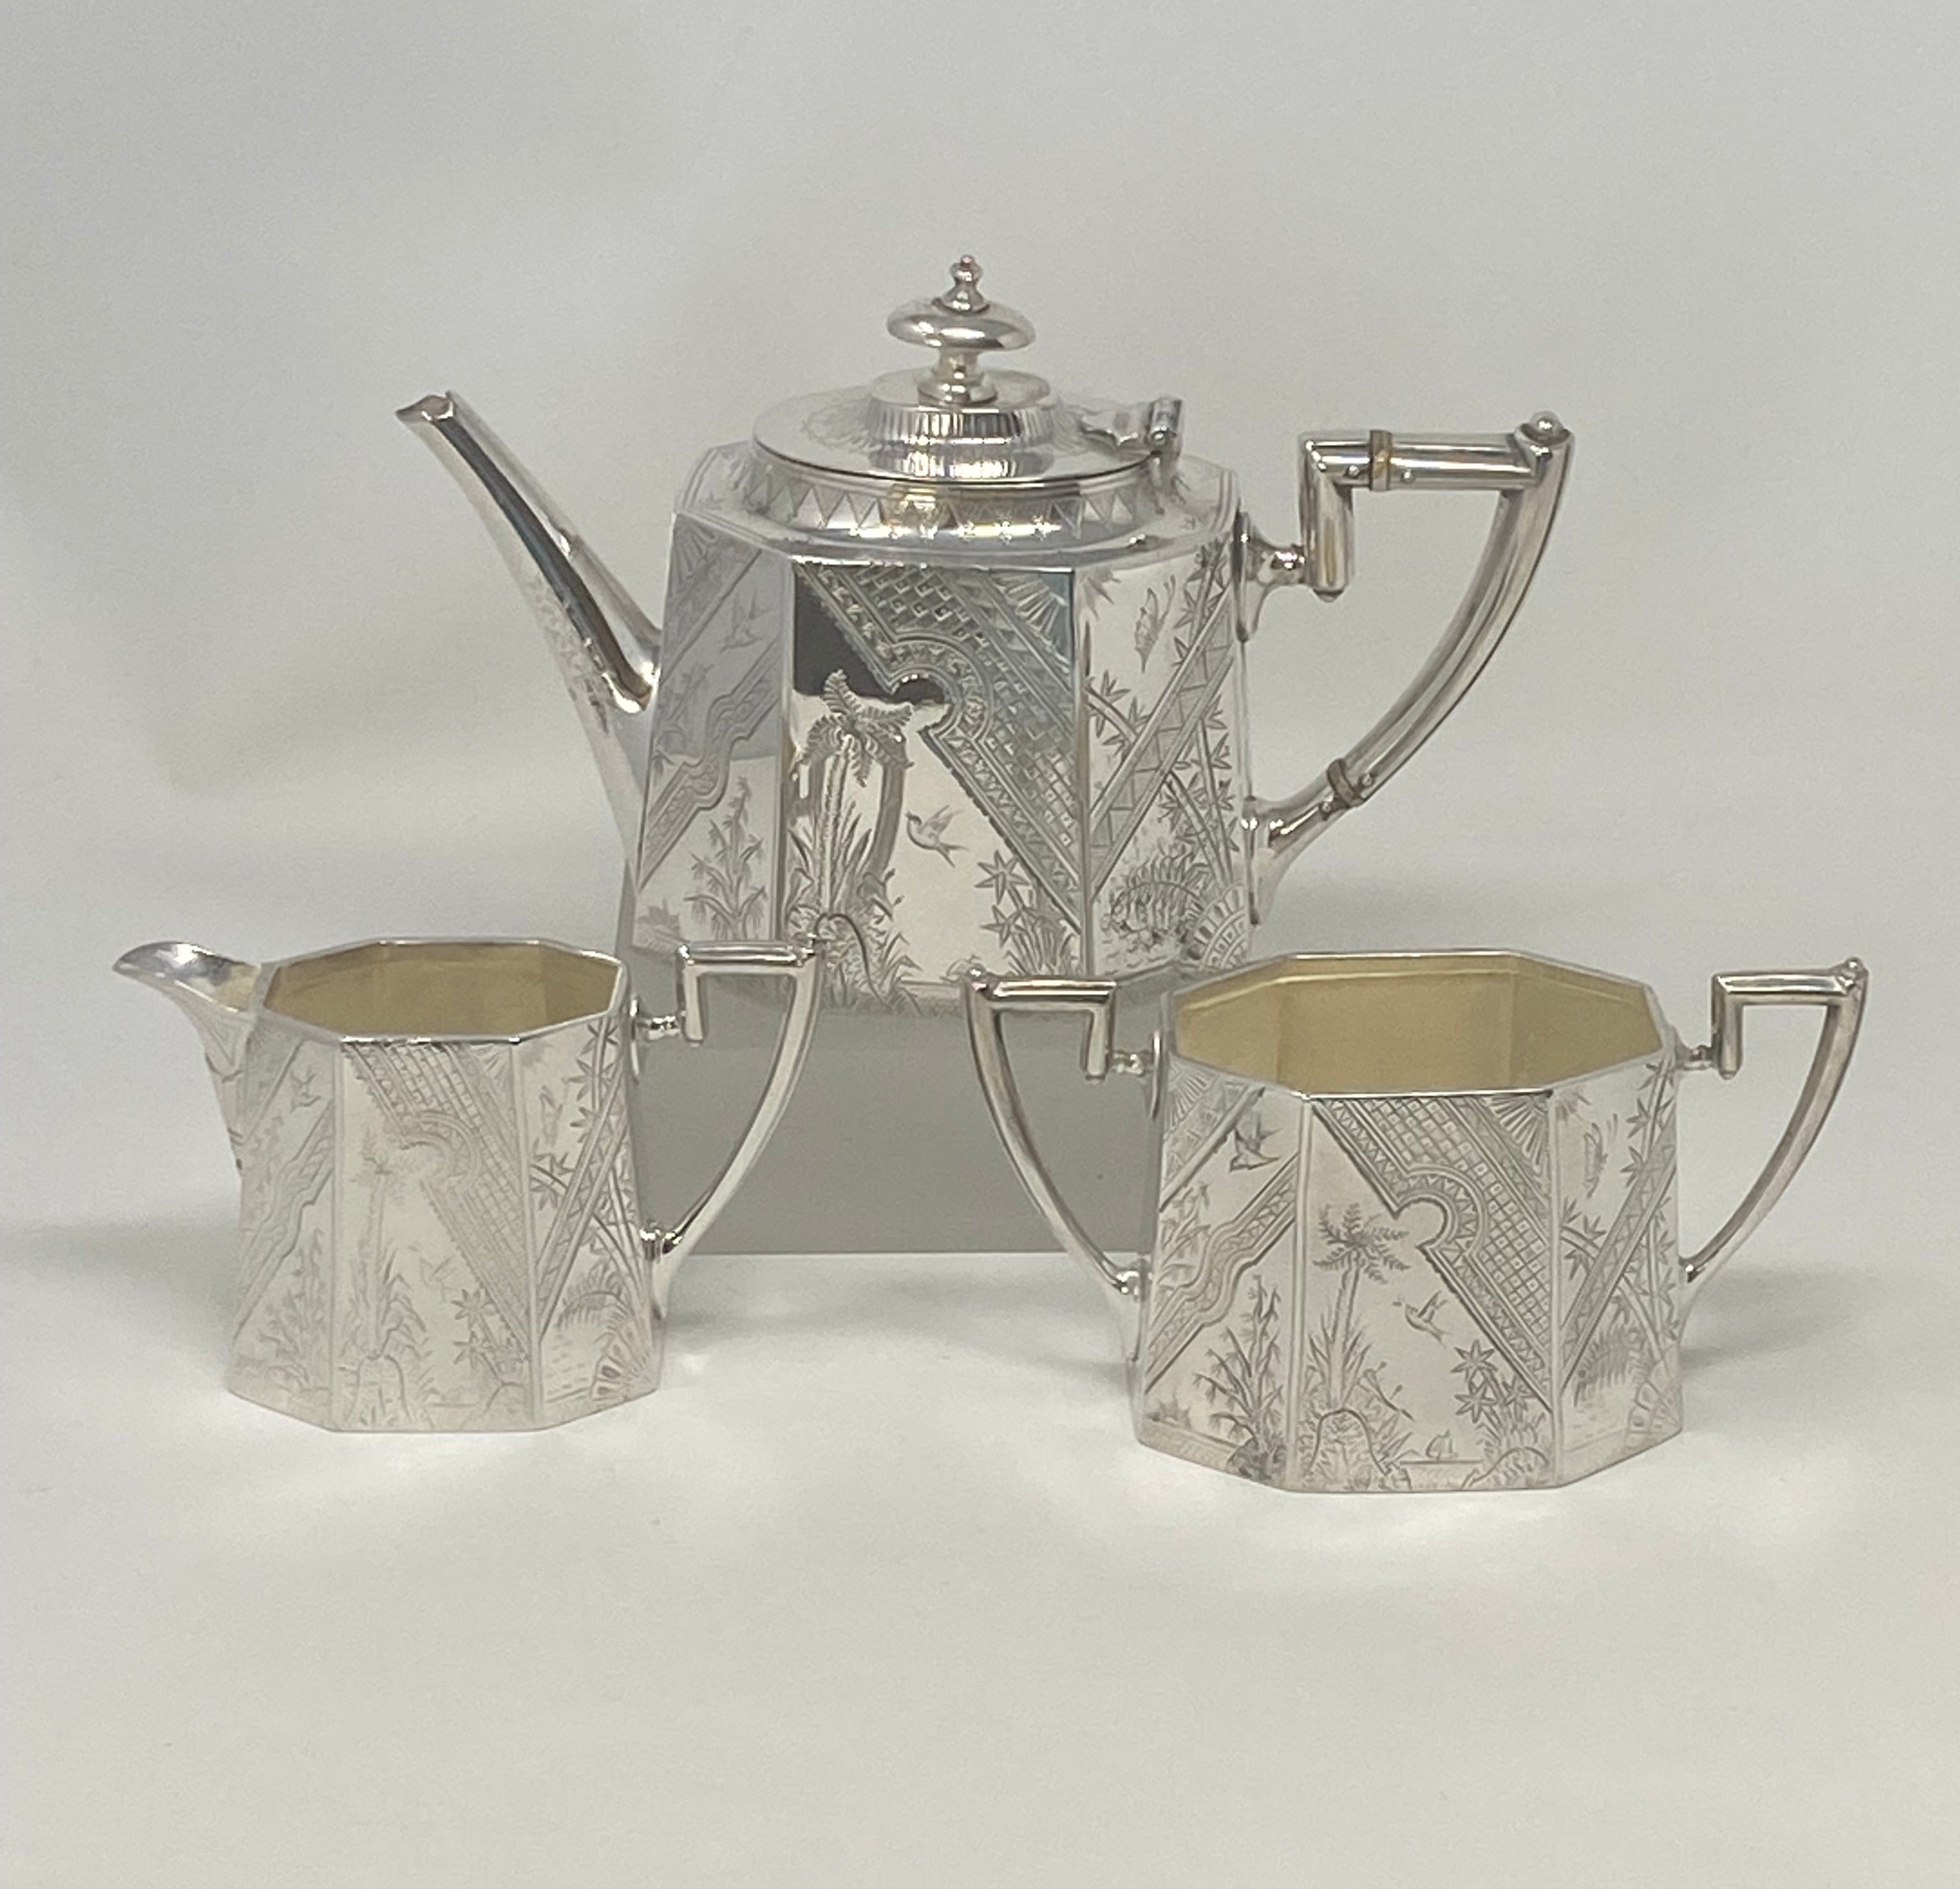 Antique Silver Plated Bachelor Tea Set